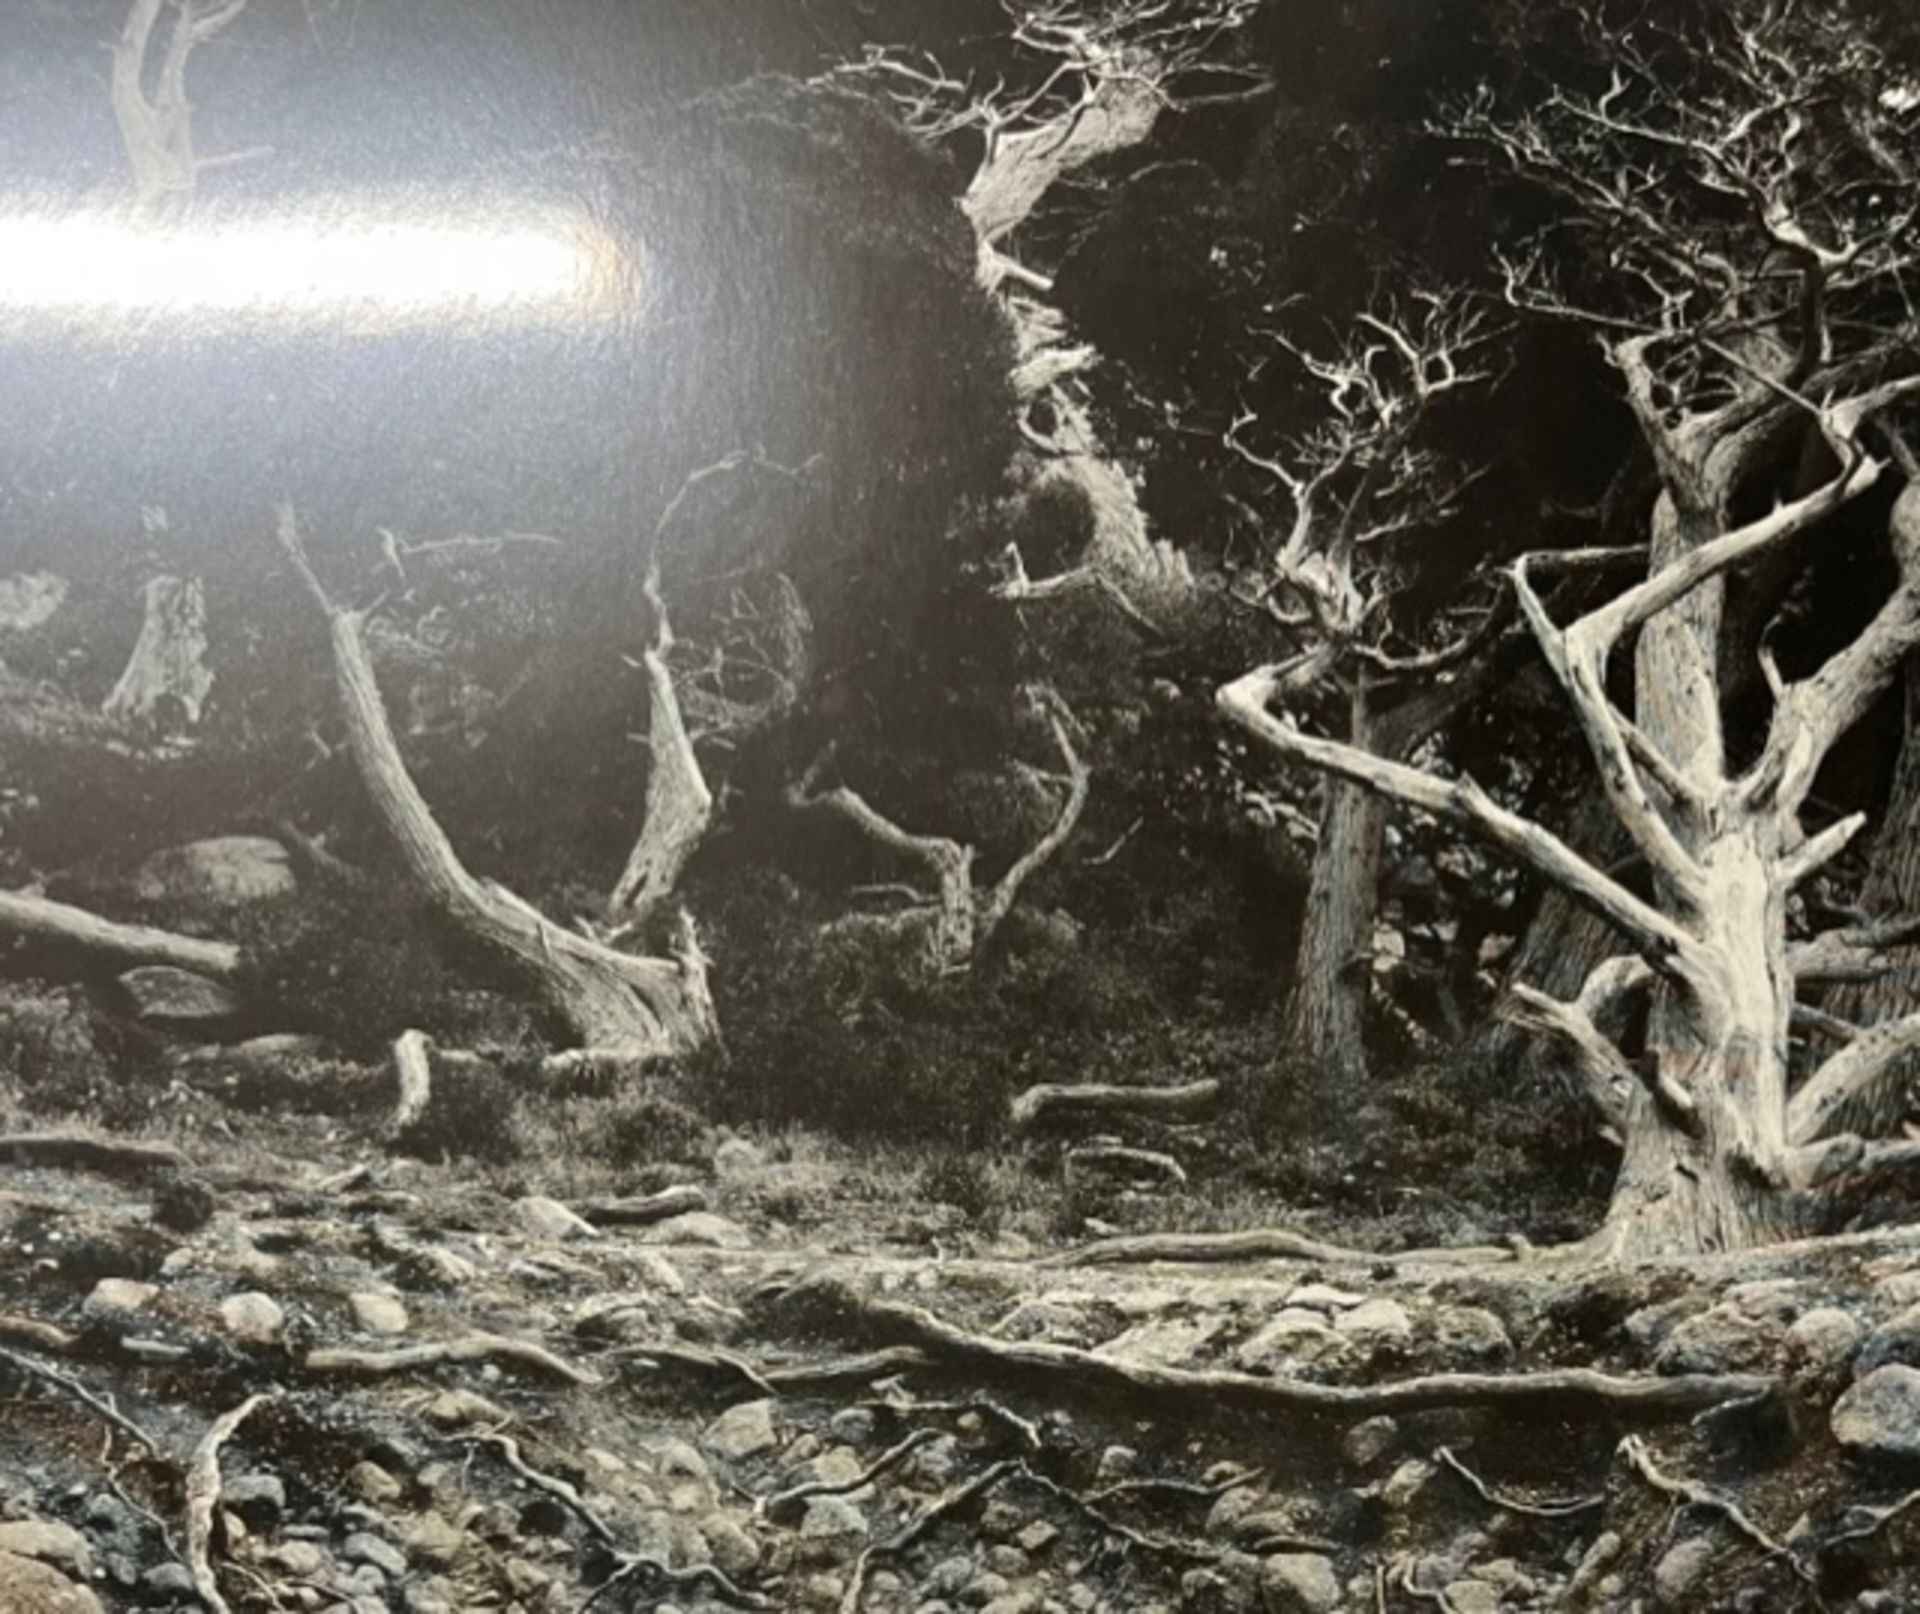 Edward Weston "Cypress Root" Print.